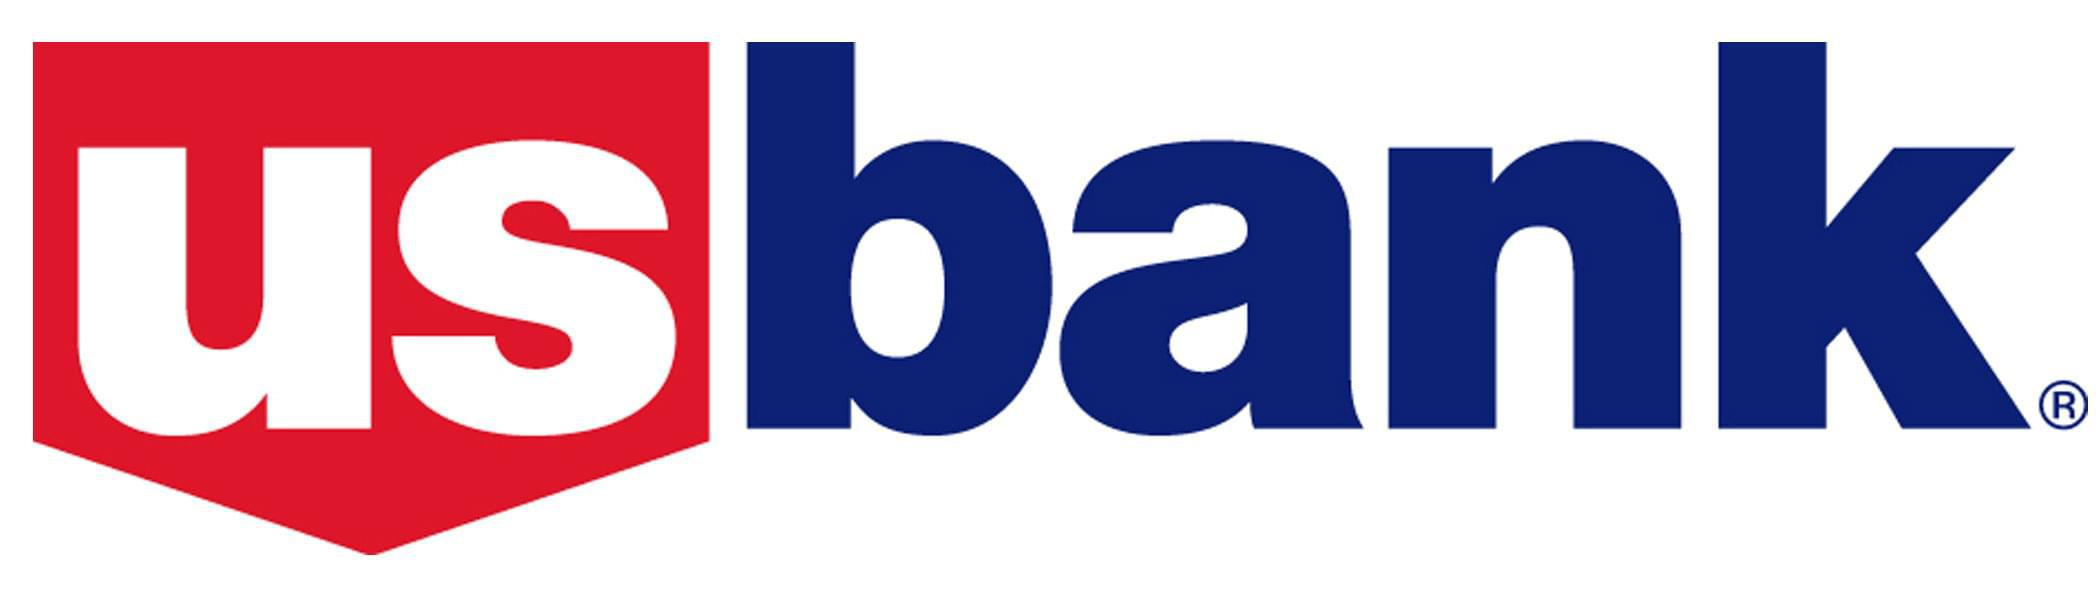 USBank-Logo1.jpg